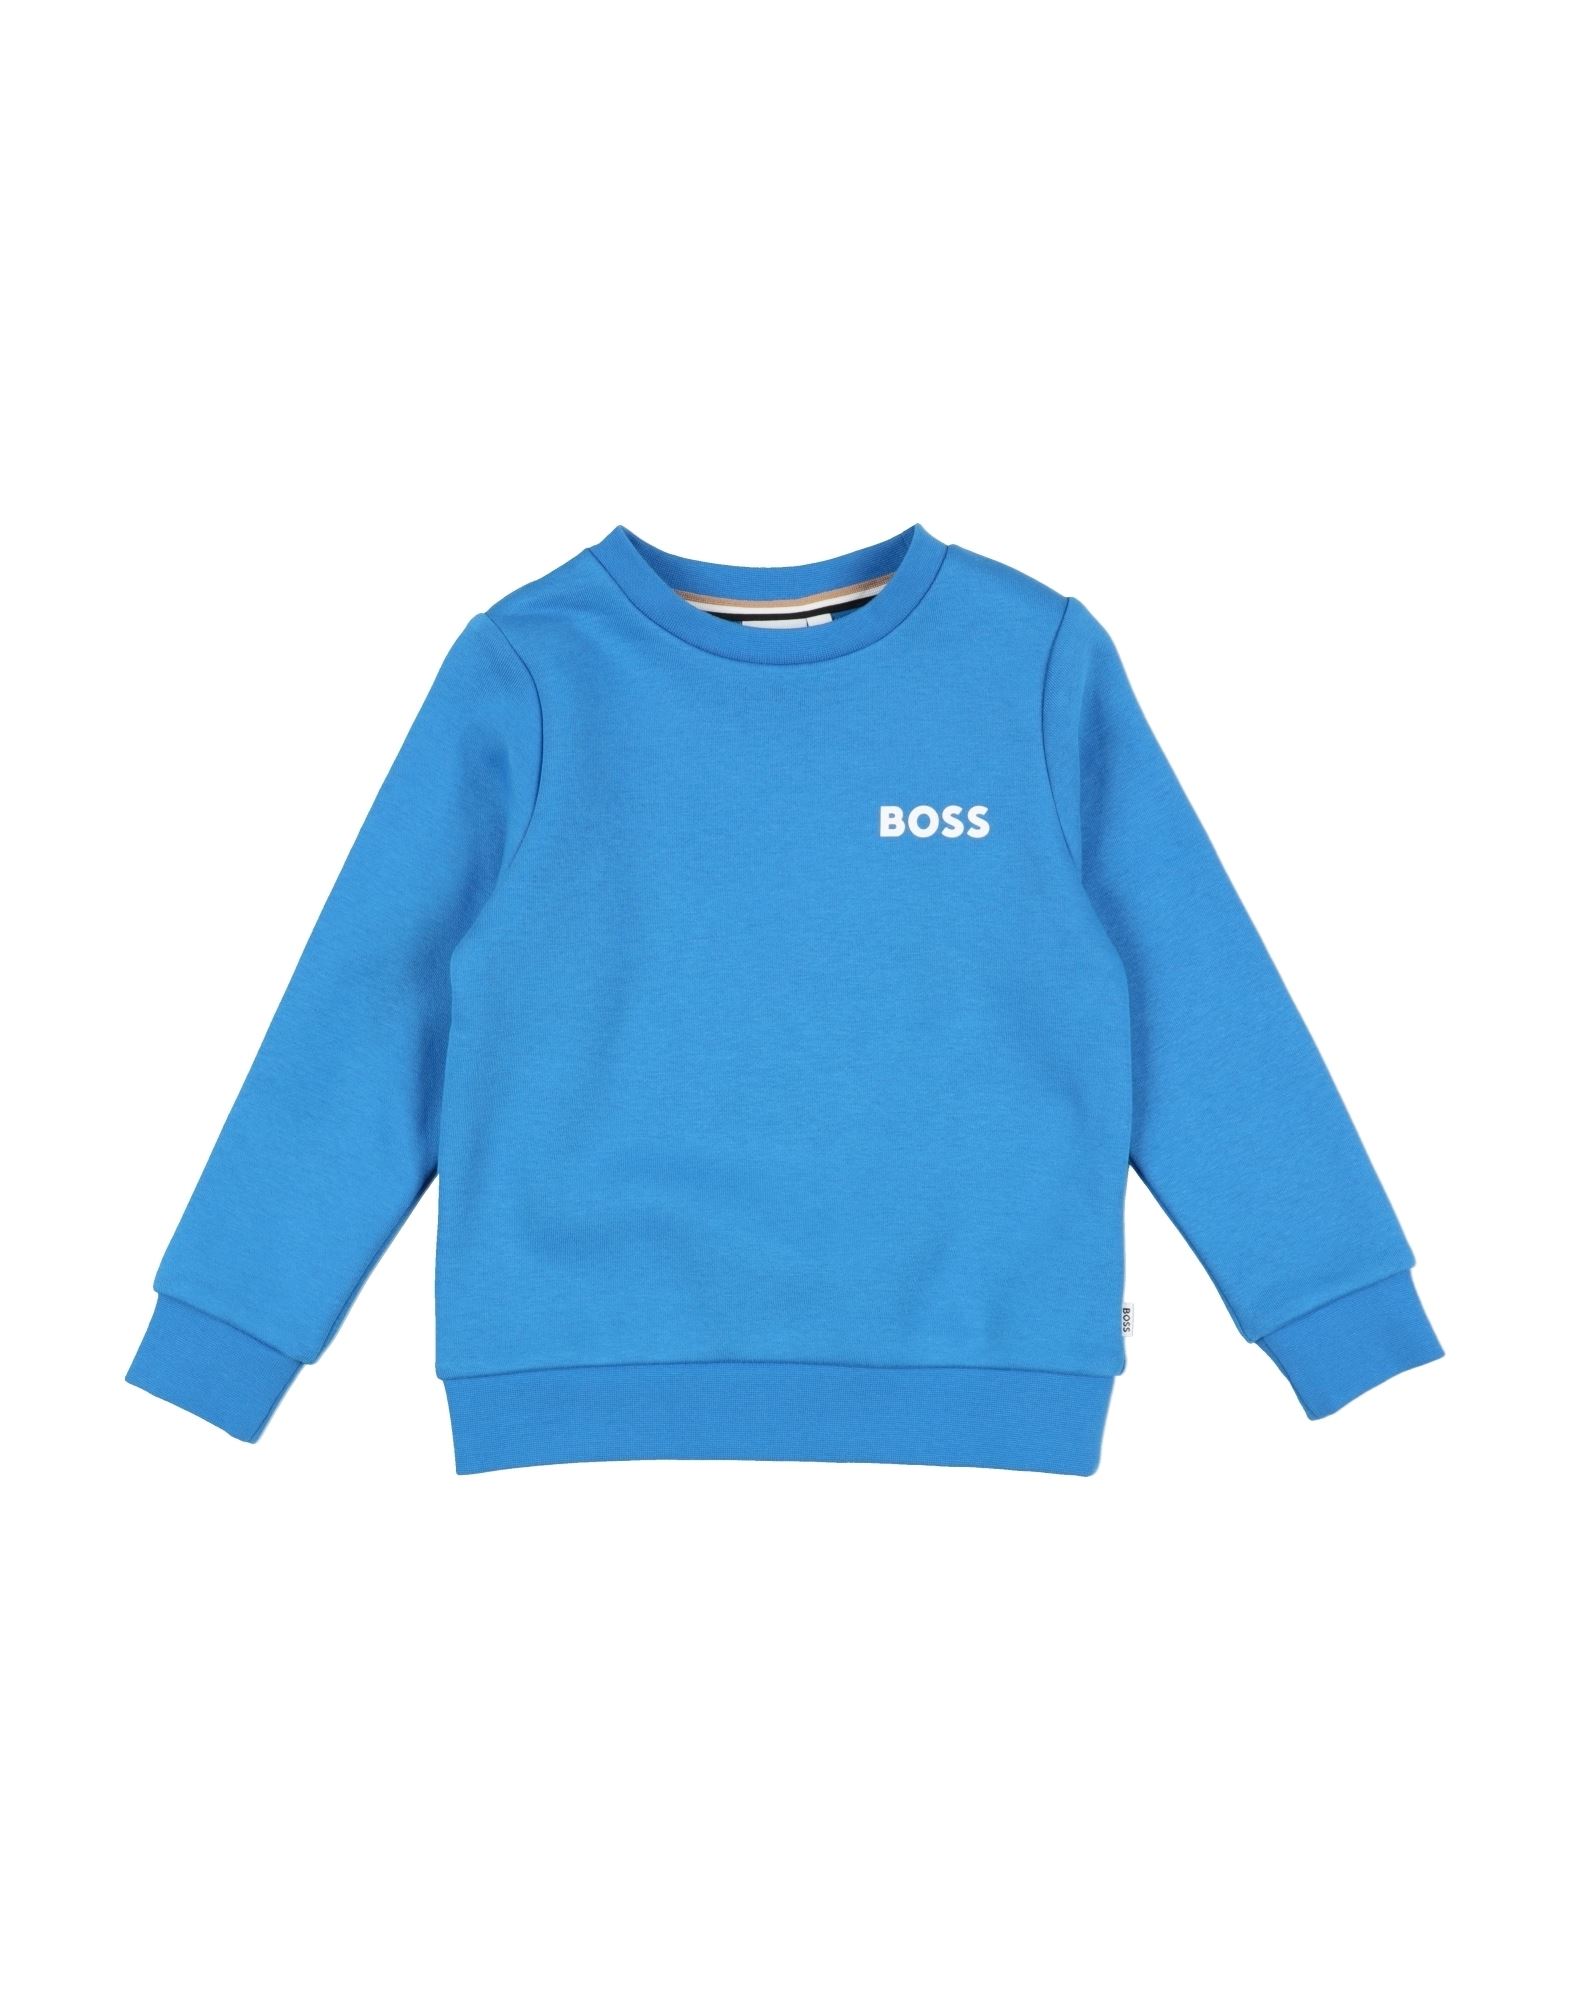 BOSS Sweatshirt Kinder Azurblau von BOSS